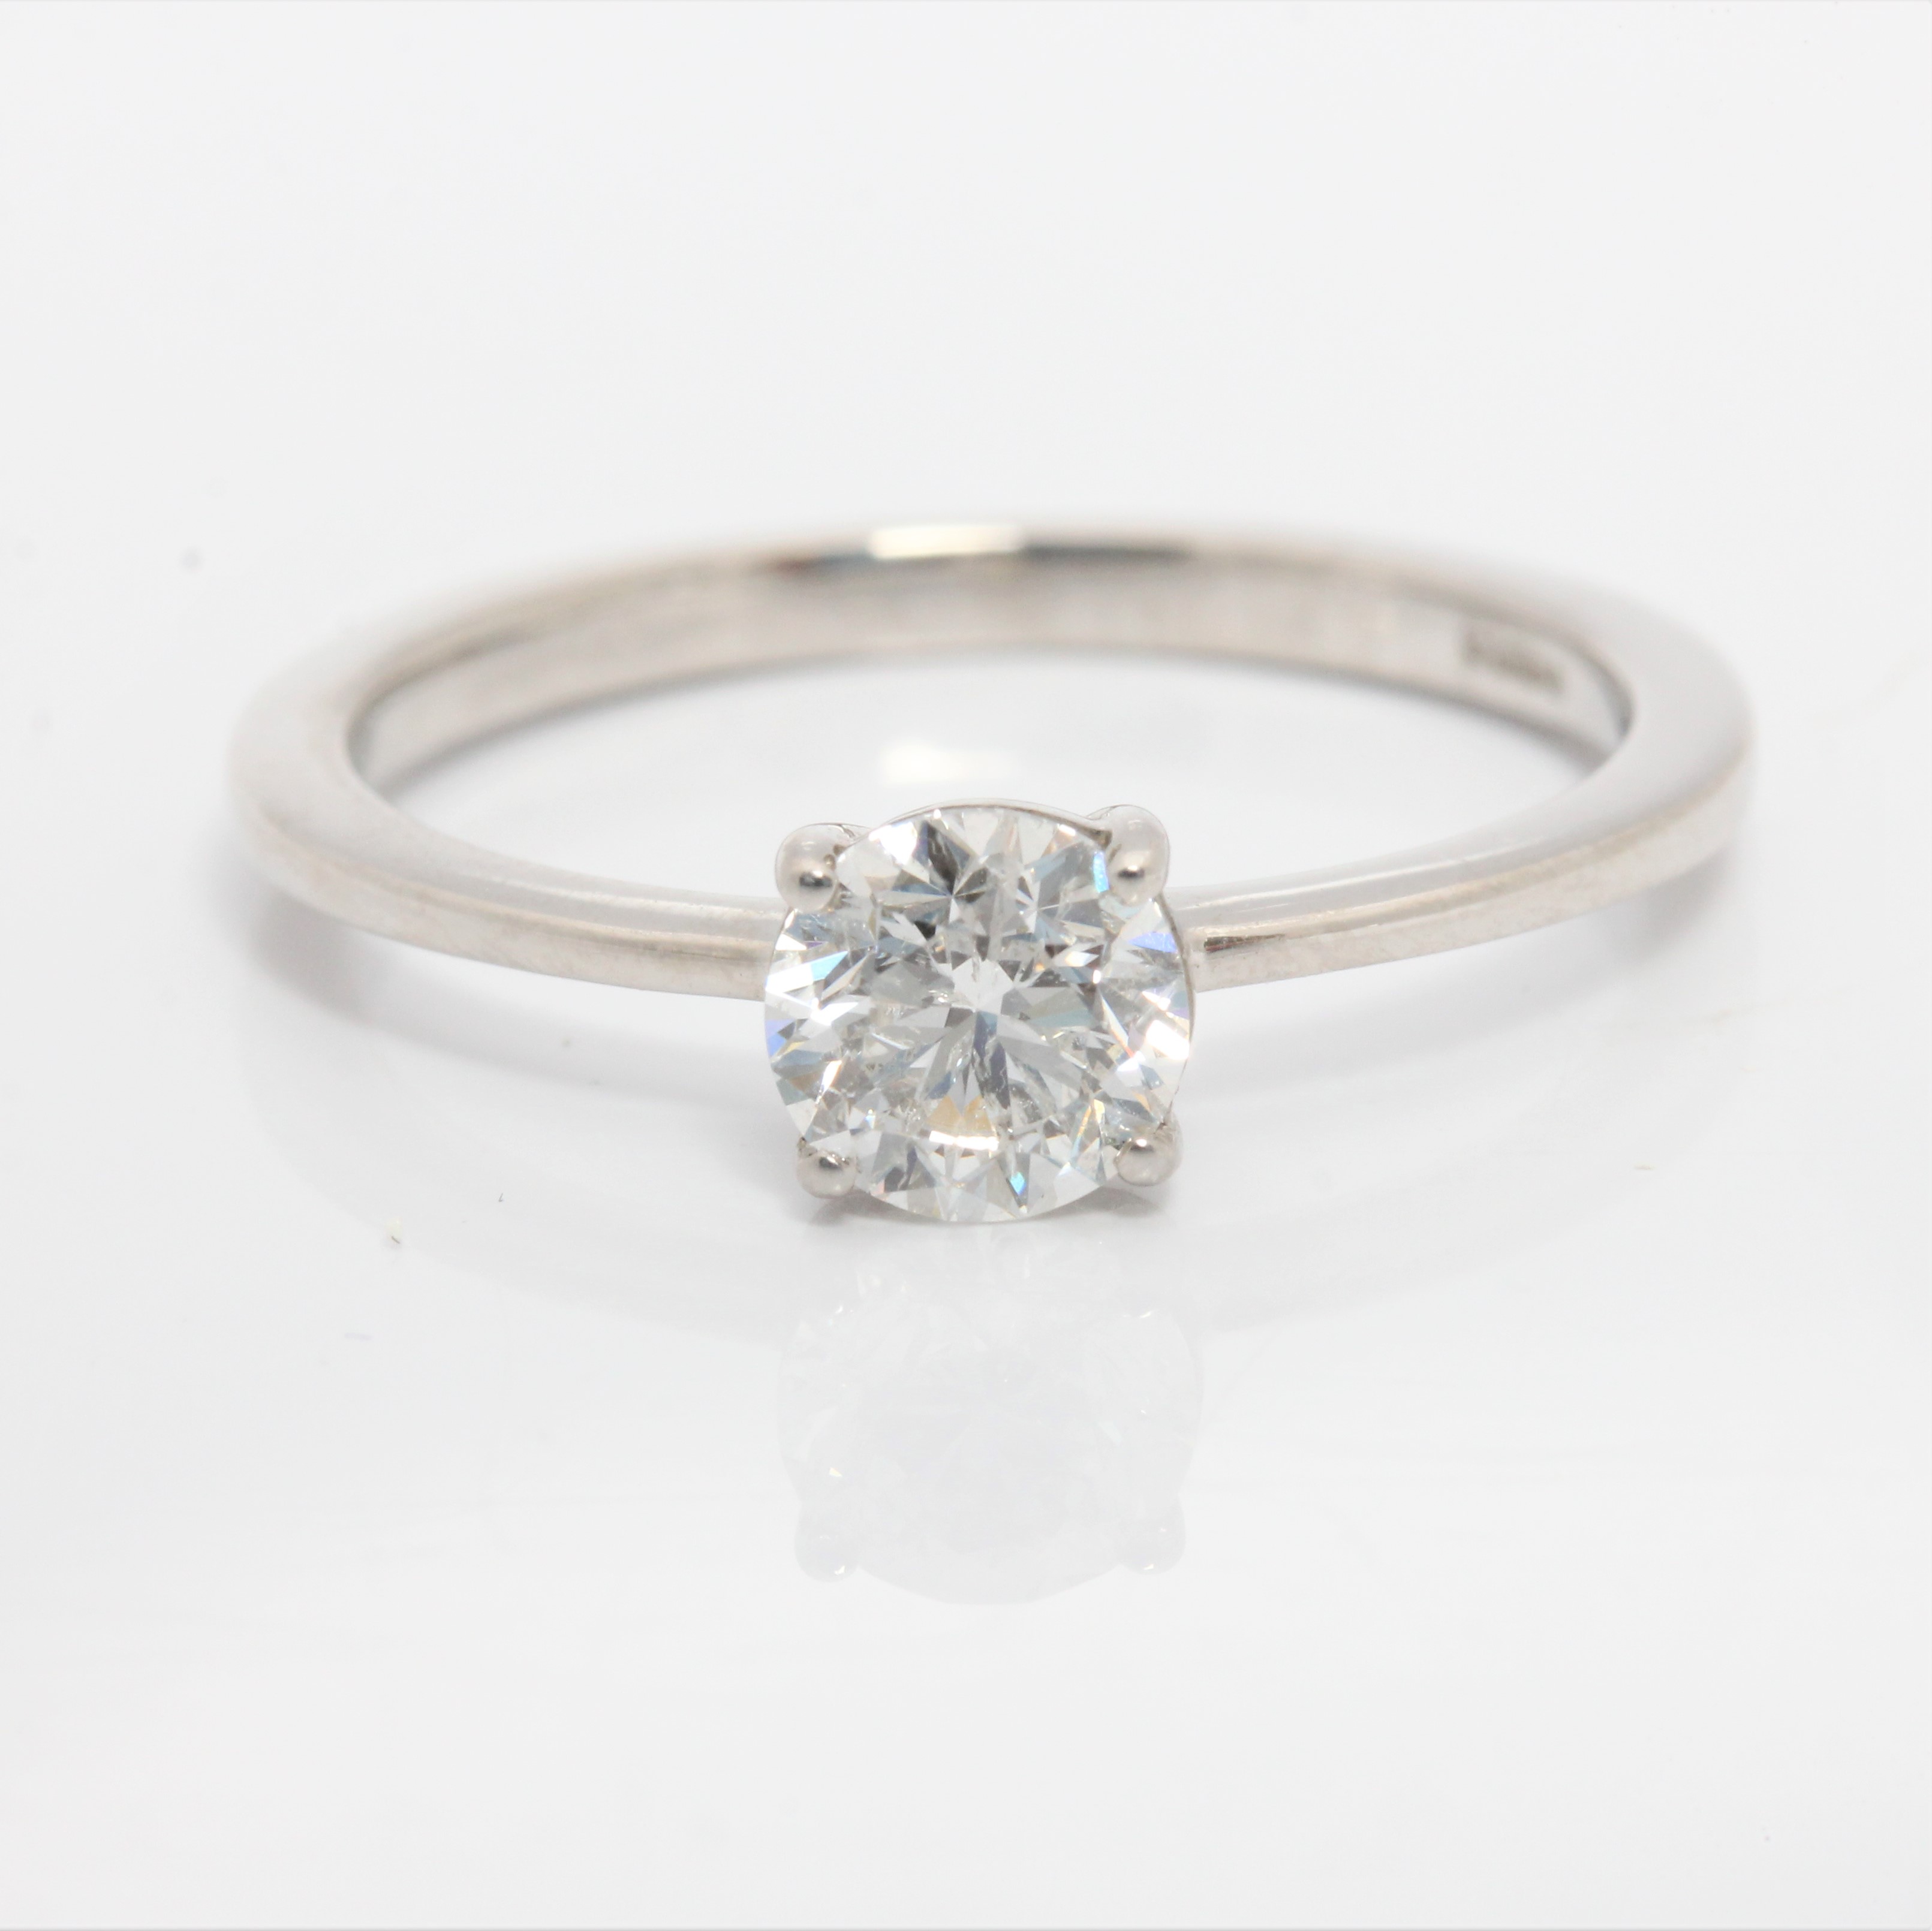 A hallmarked platinum diamond solitaire ring, set with a round brilliant cut diamond measuring